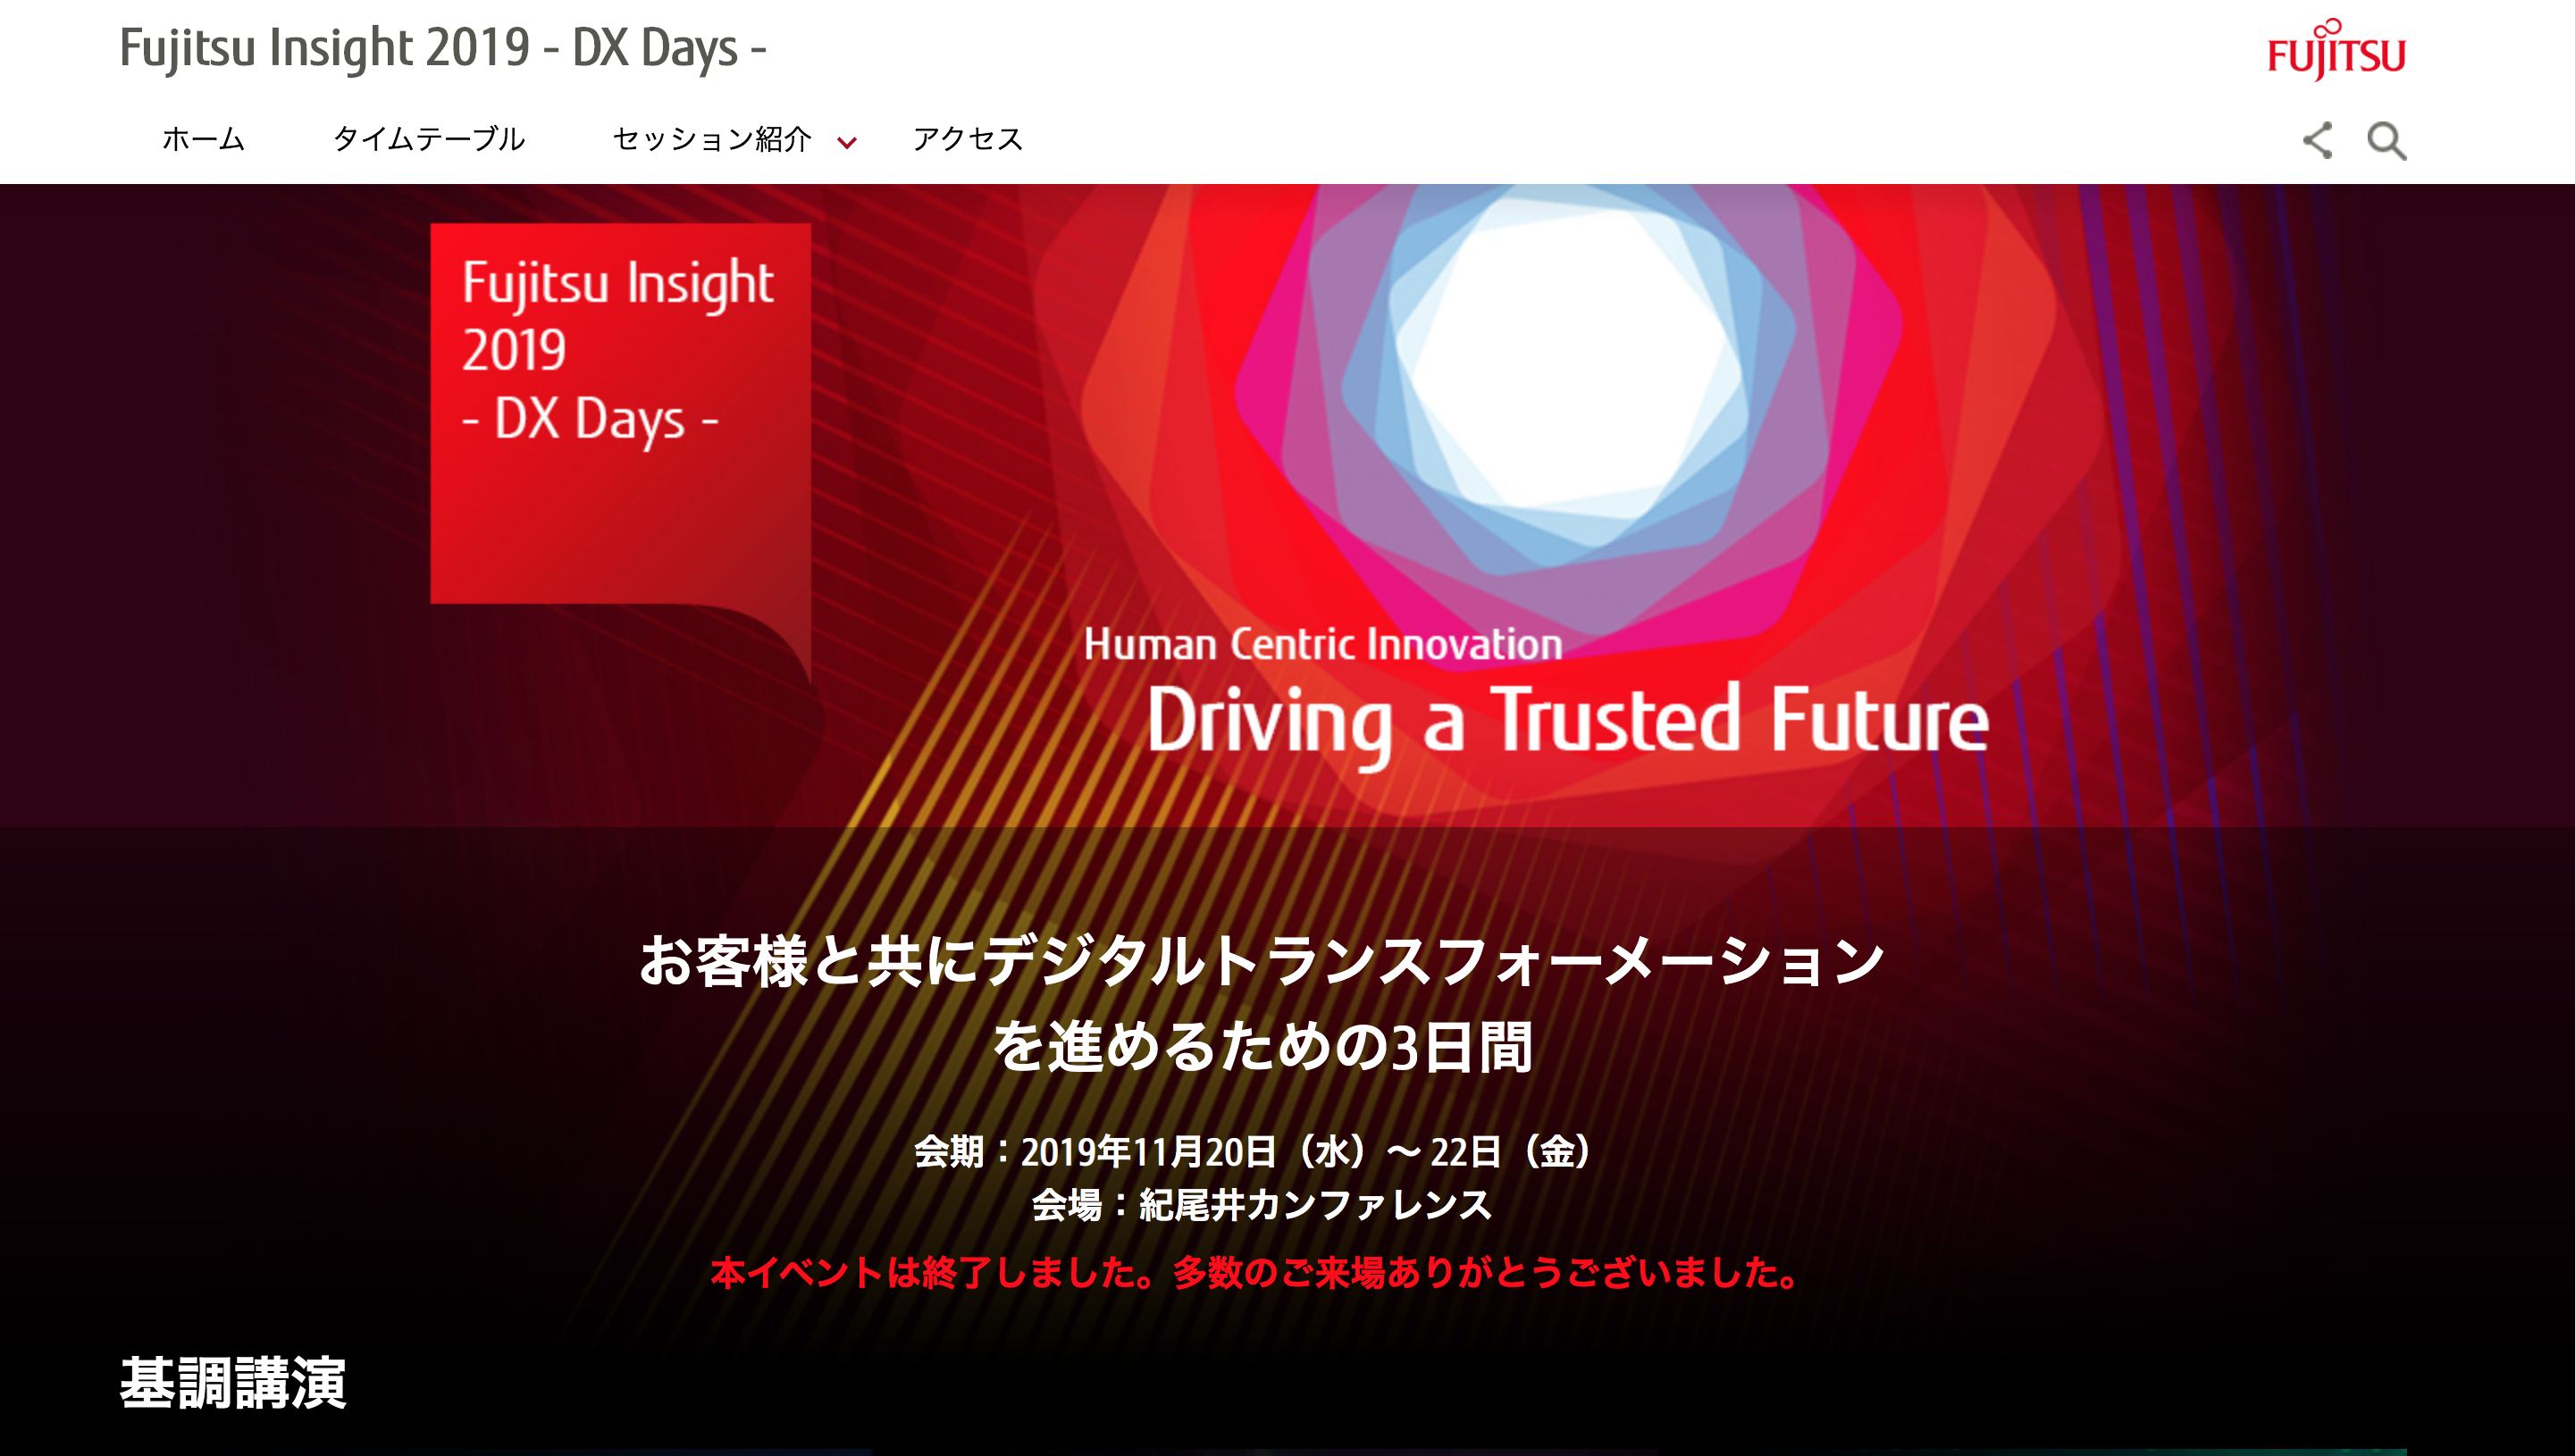 Launching the Fujitsu Digital Transformation Customer Conference 